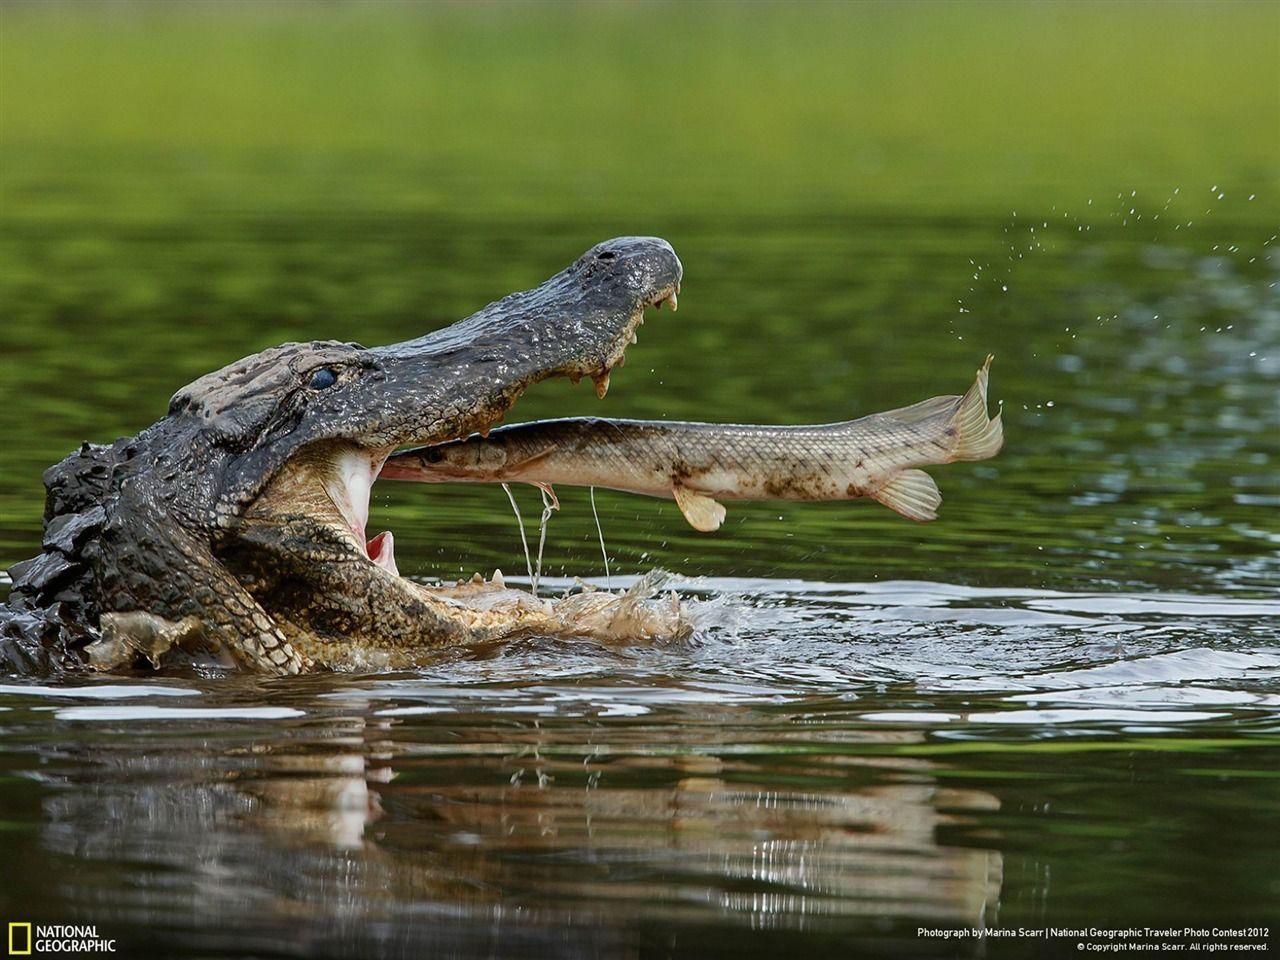 American Alligator National Geographic Wallpaper